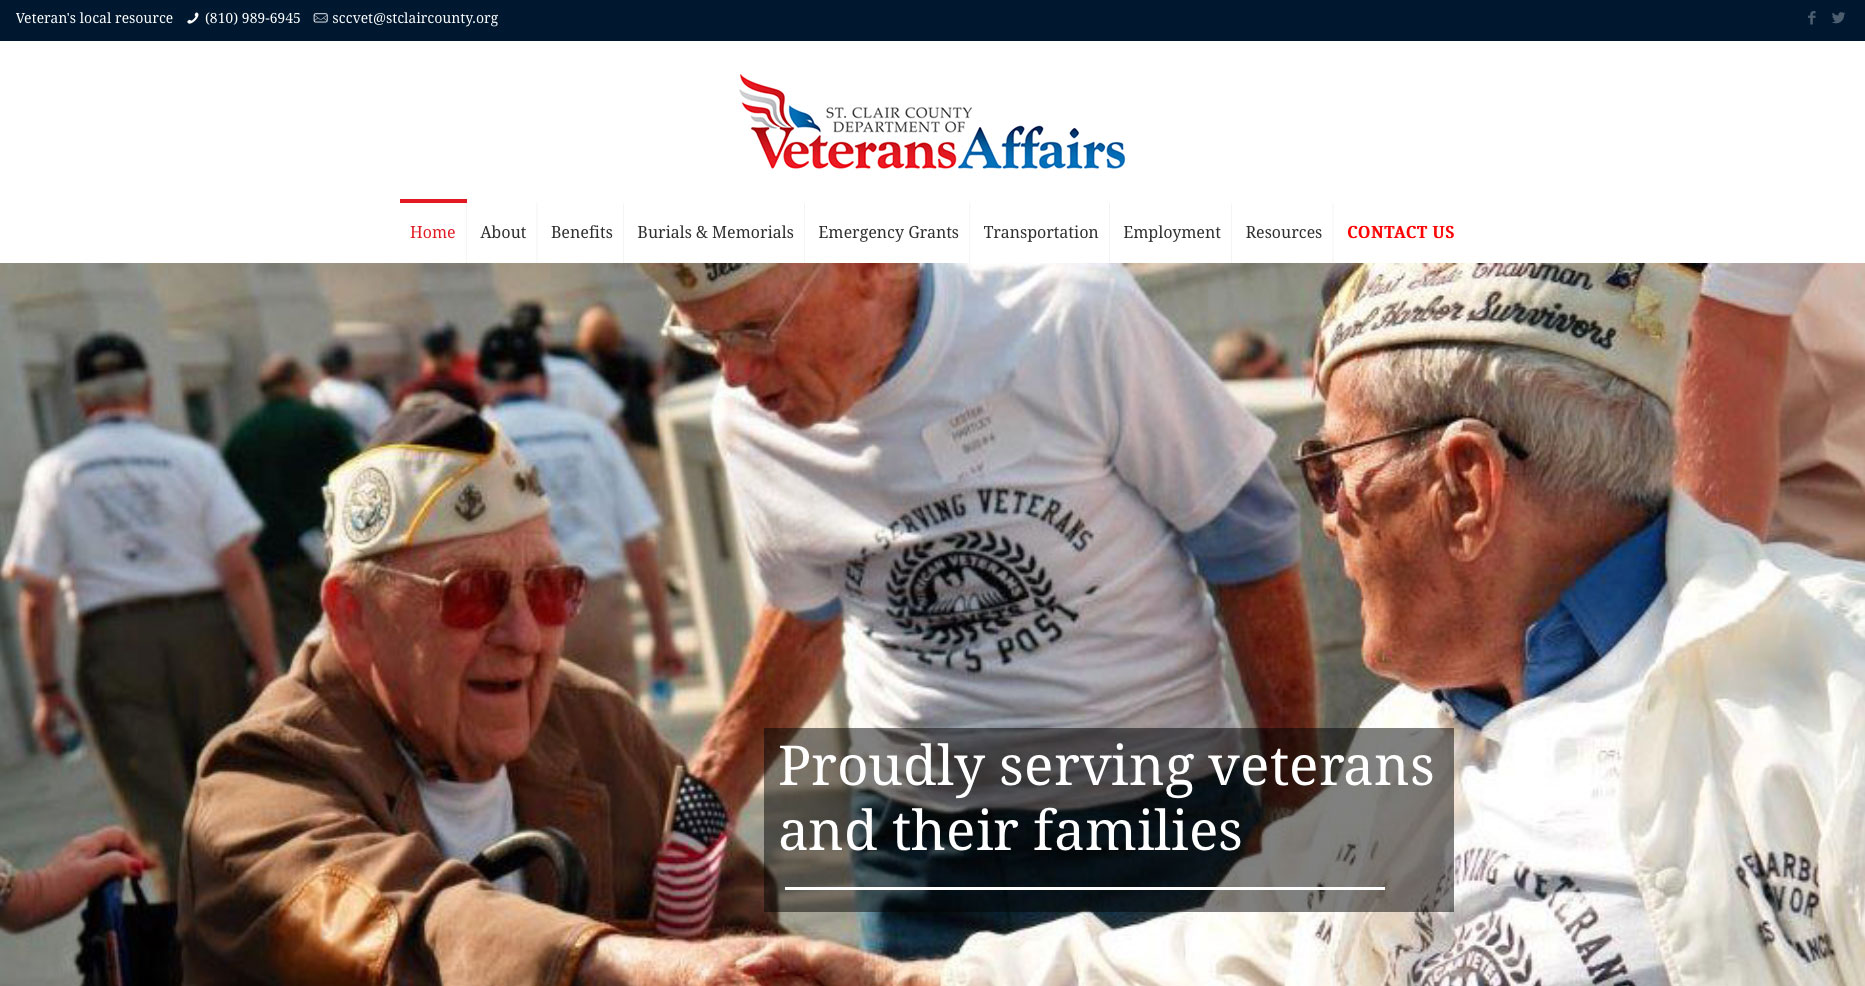 St. Clair County Veterans